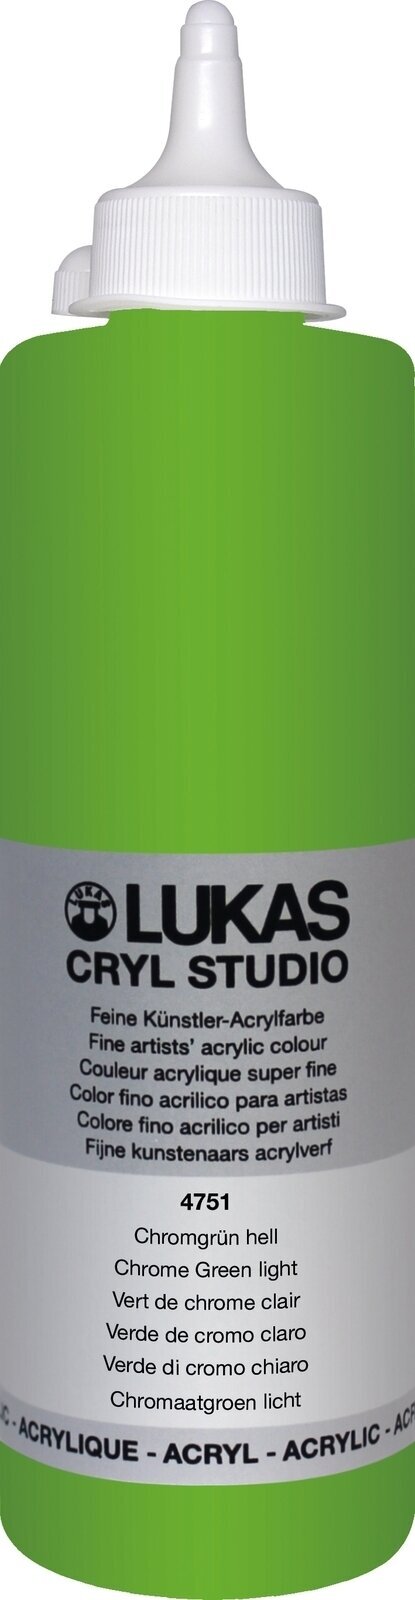 Acrylic Paint Lukas Cryl Studio Acrylic Paint Plastic Bottle Acrylic Paint Chrome Green Light 500 ml 1 pc